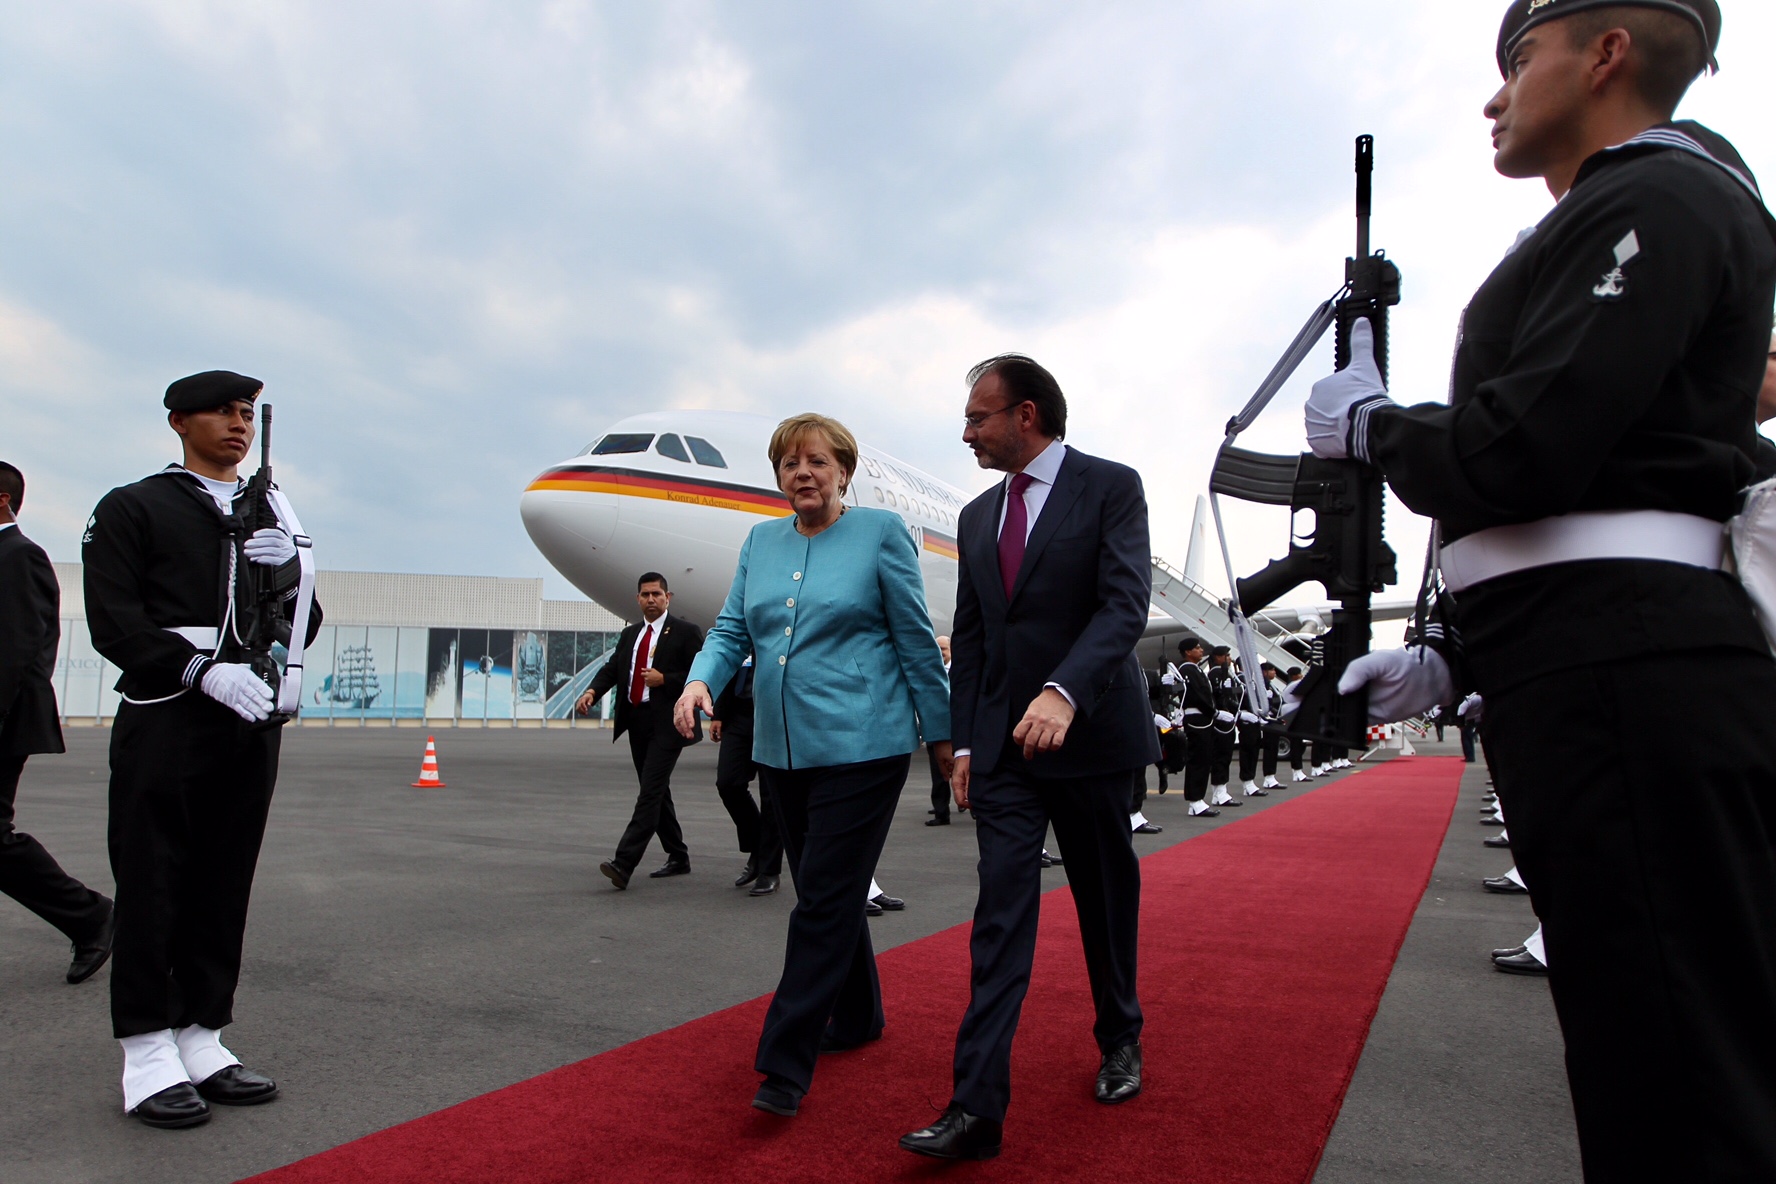 /cms/uploads/image/file/288728/FOTO_1_La_Canciller_Federal_Alemana__Angela_Merkel_llega_a_la_ciudad_de_M_xico.jpg